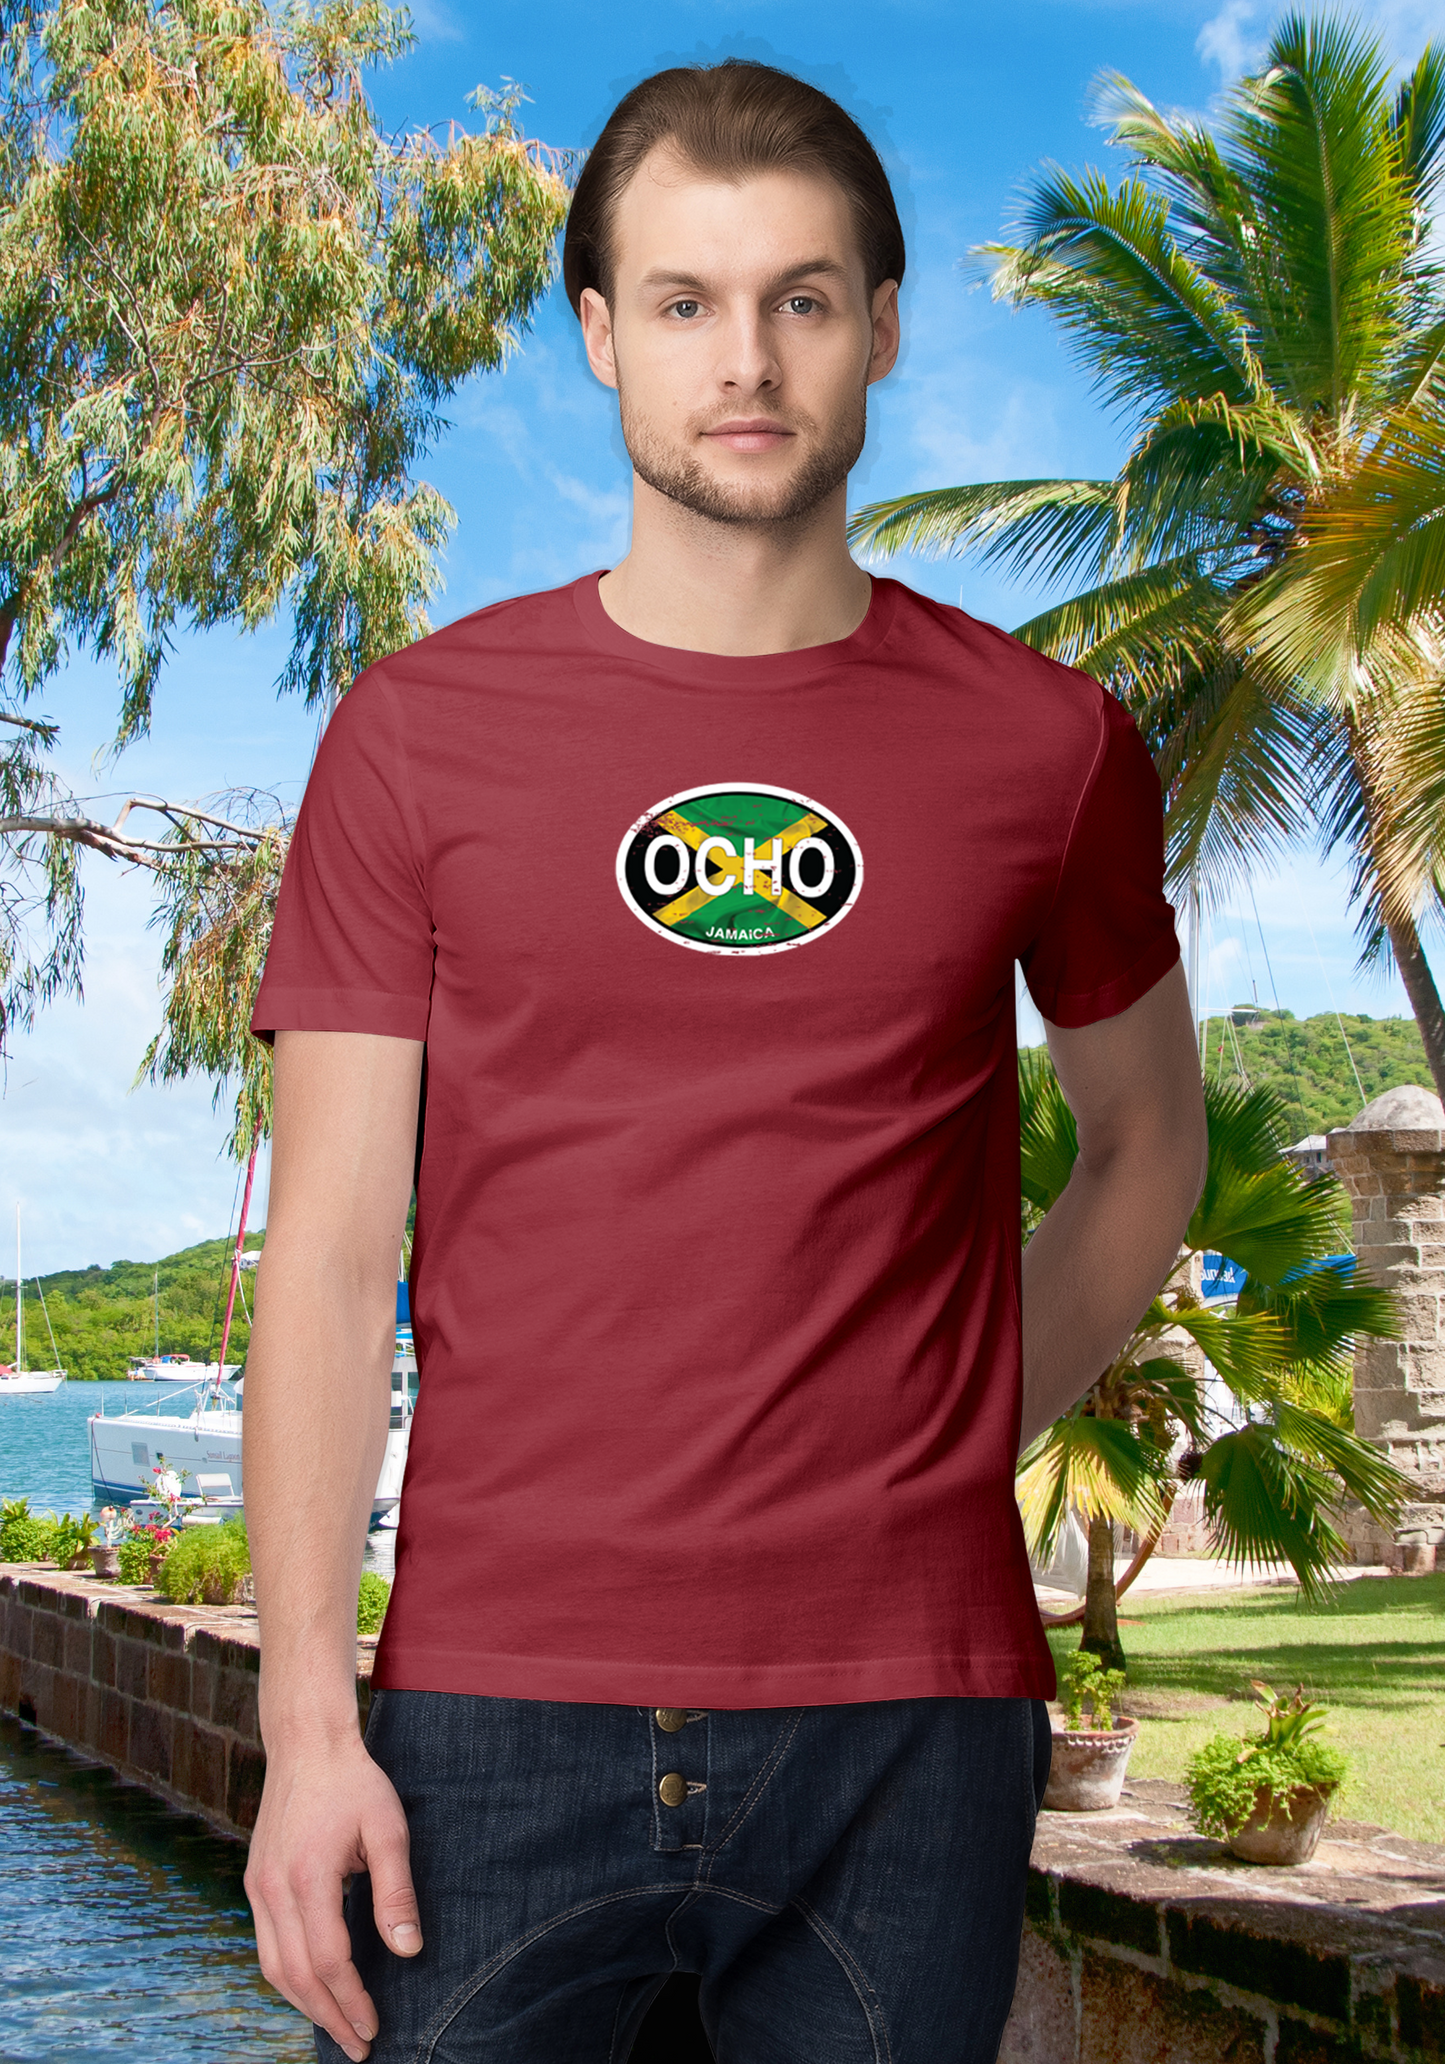 Ocho Rios Men's Flag T-Shirt Souvenirs - My Destination Location